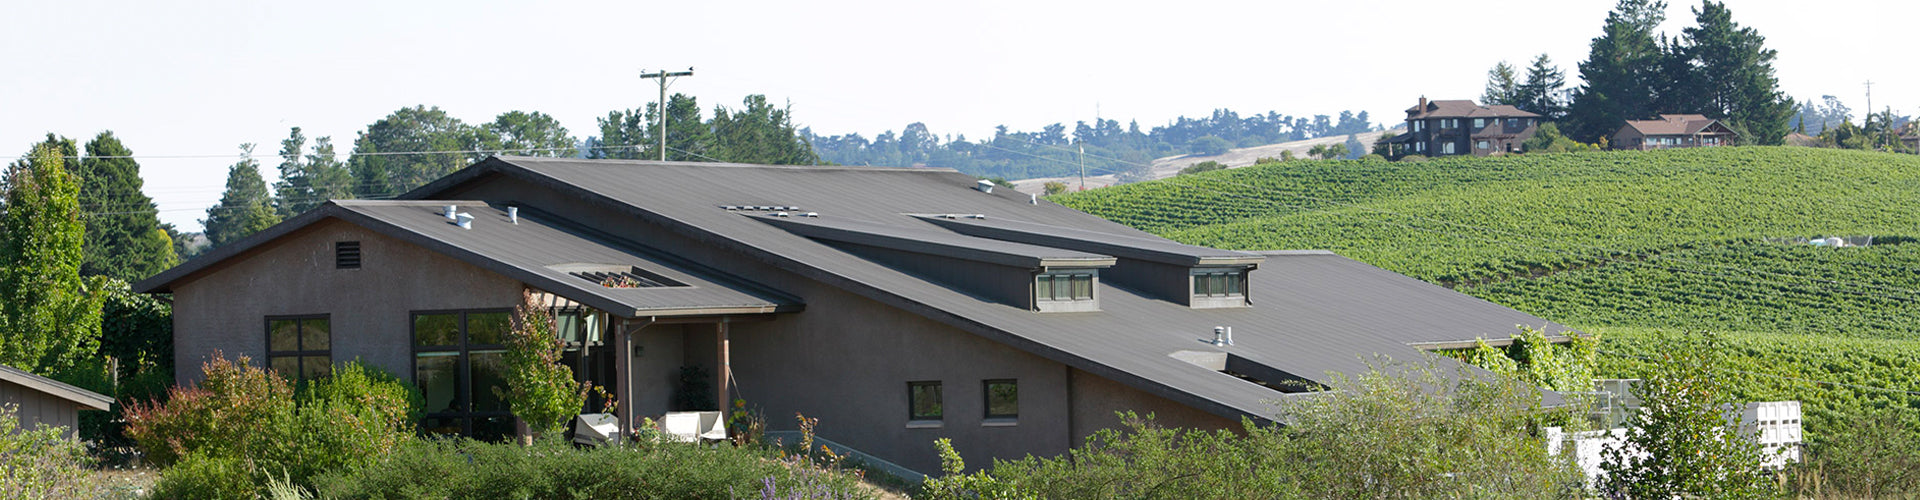 Littorai Winery & Vineyards in Sonoma County, California